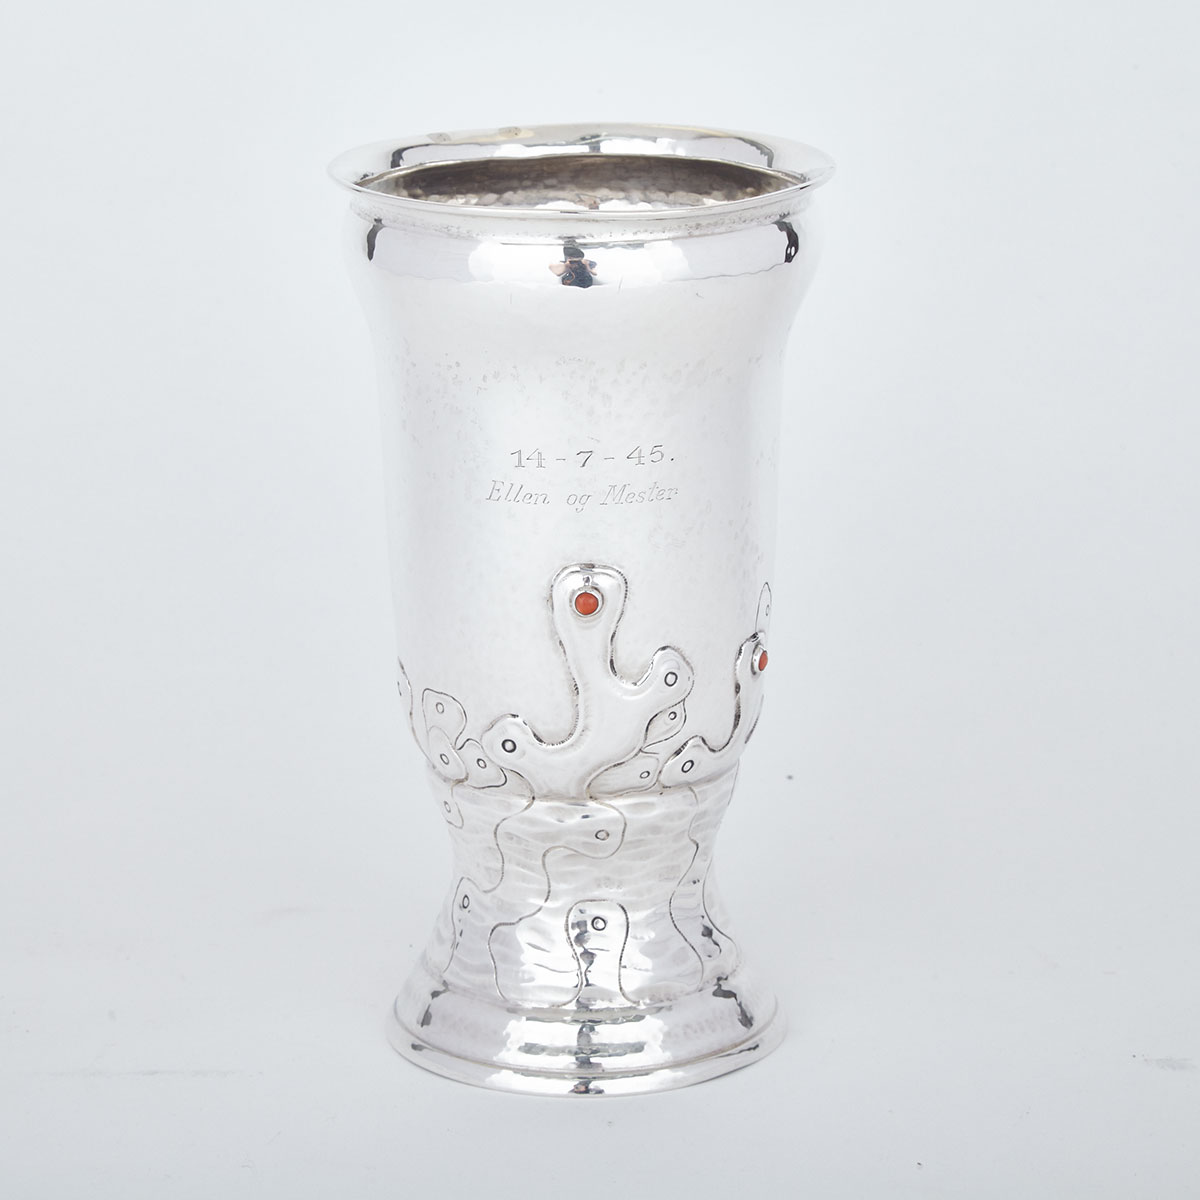 Danish Silver ‘Coral’ Vase, Carl Poul Petersen, Copenhagen, 1928